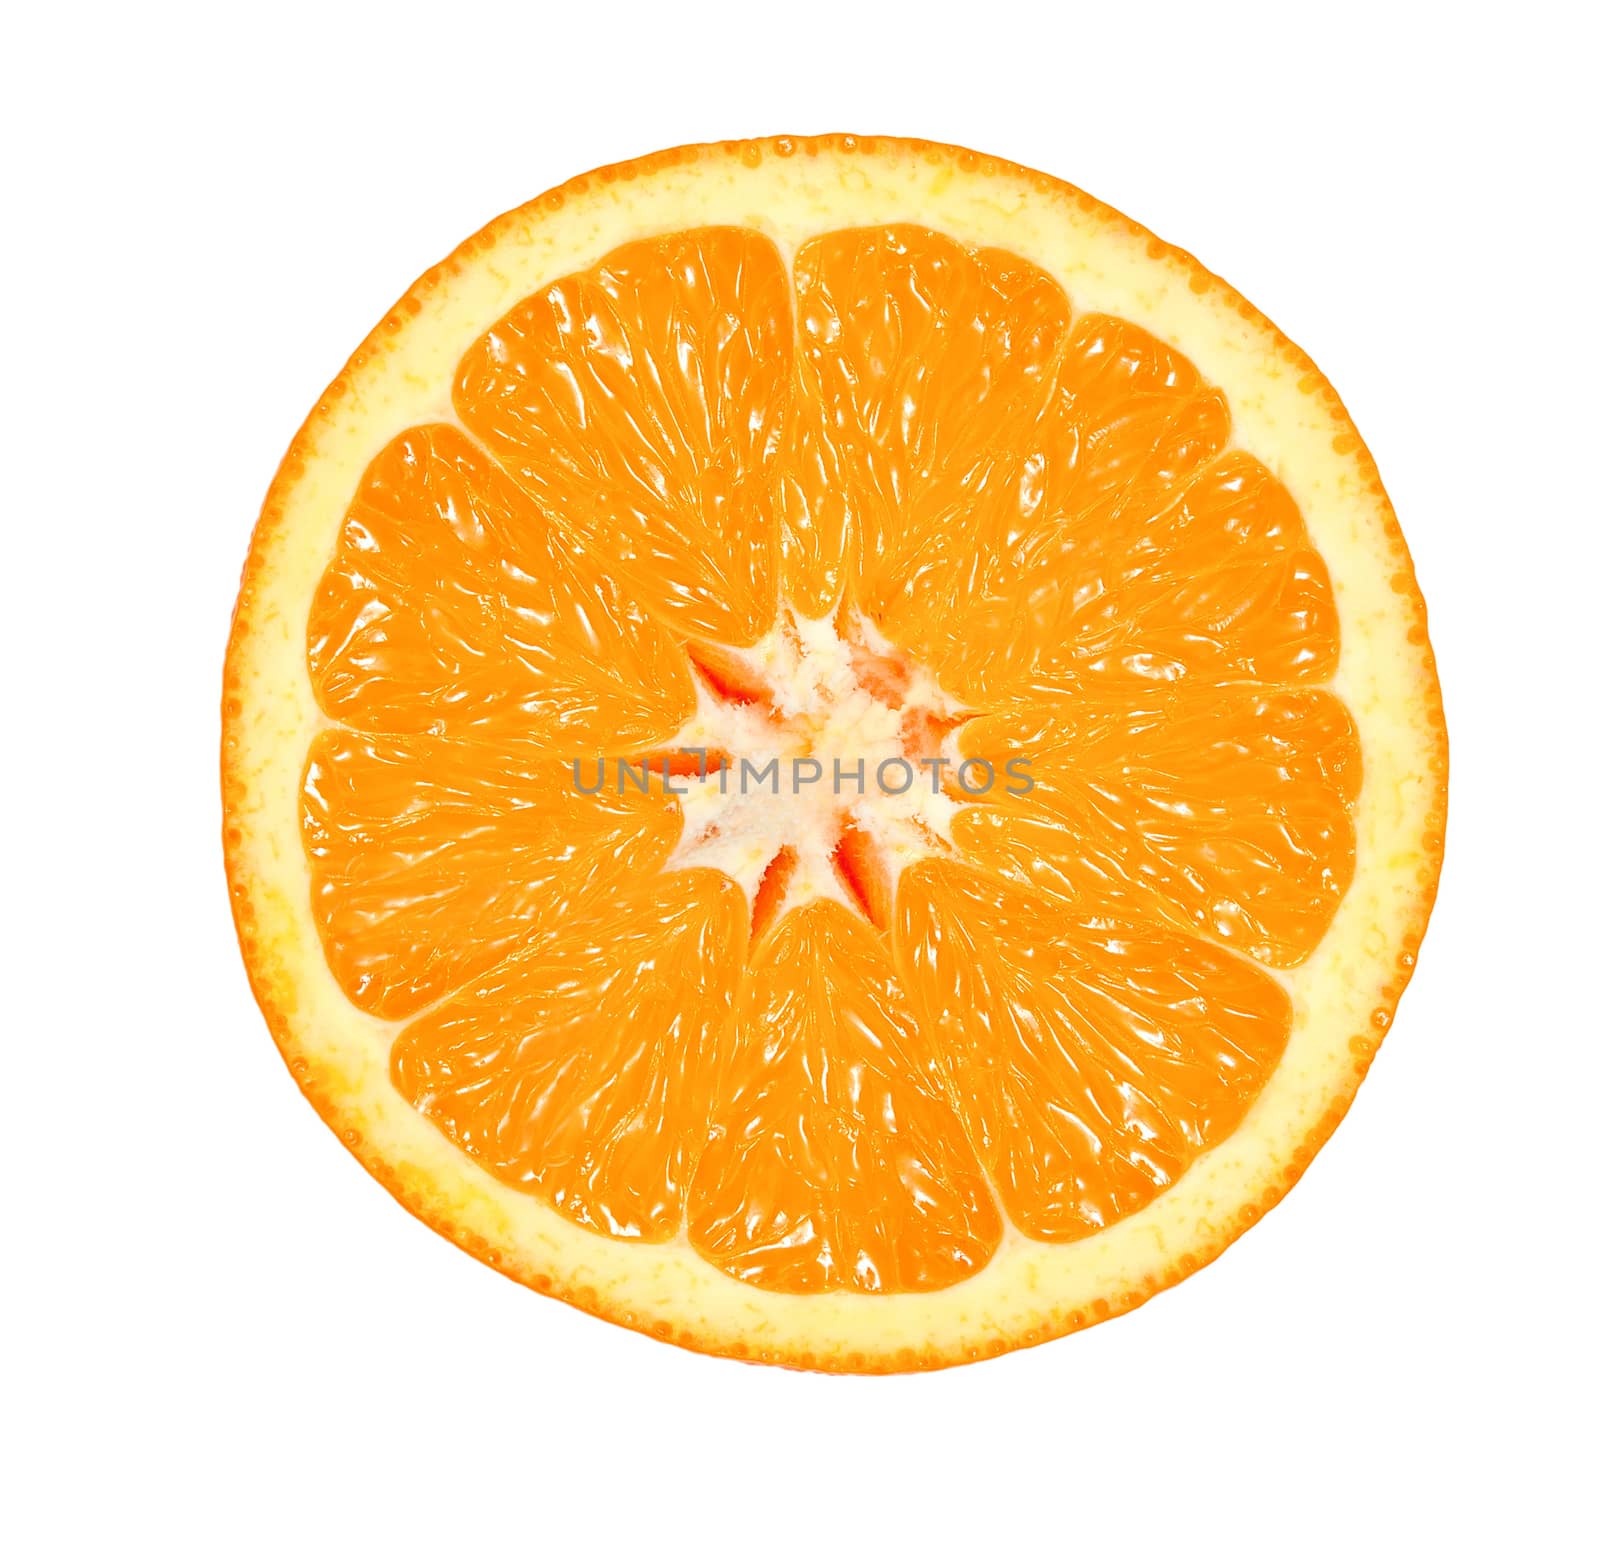 Slice of fresh orange by ozaiachin